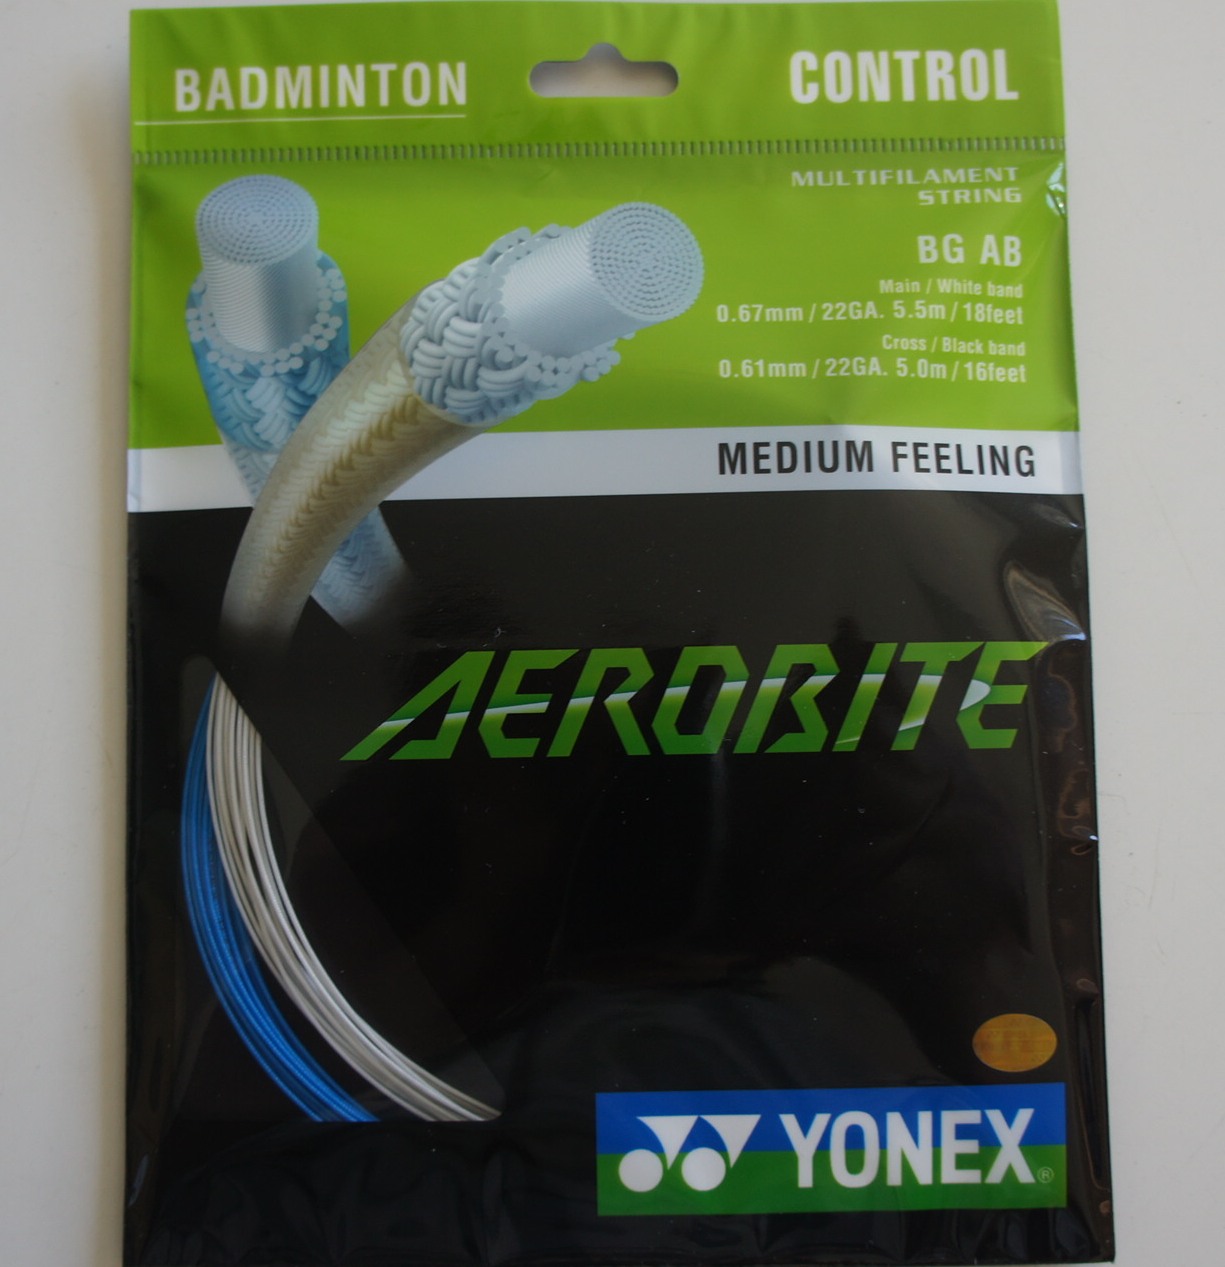 YONEX BG AB Aerobite Badminton String (10 Packs), Blue/White